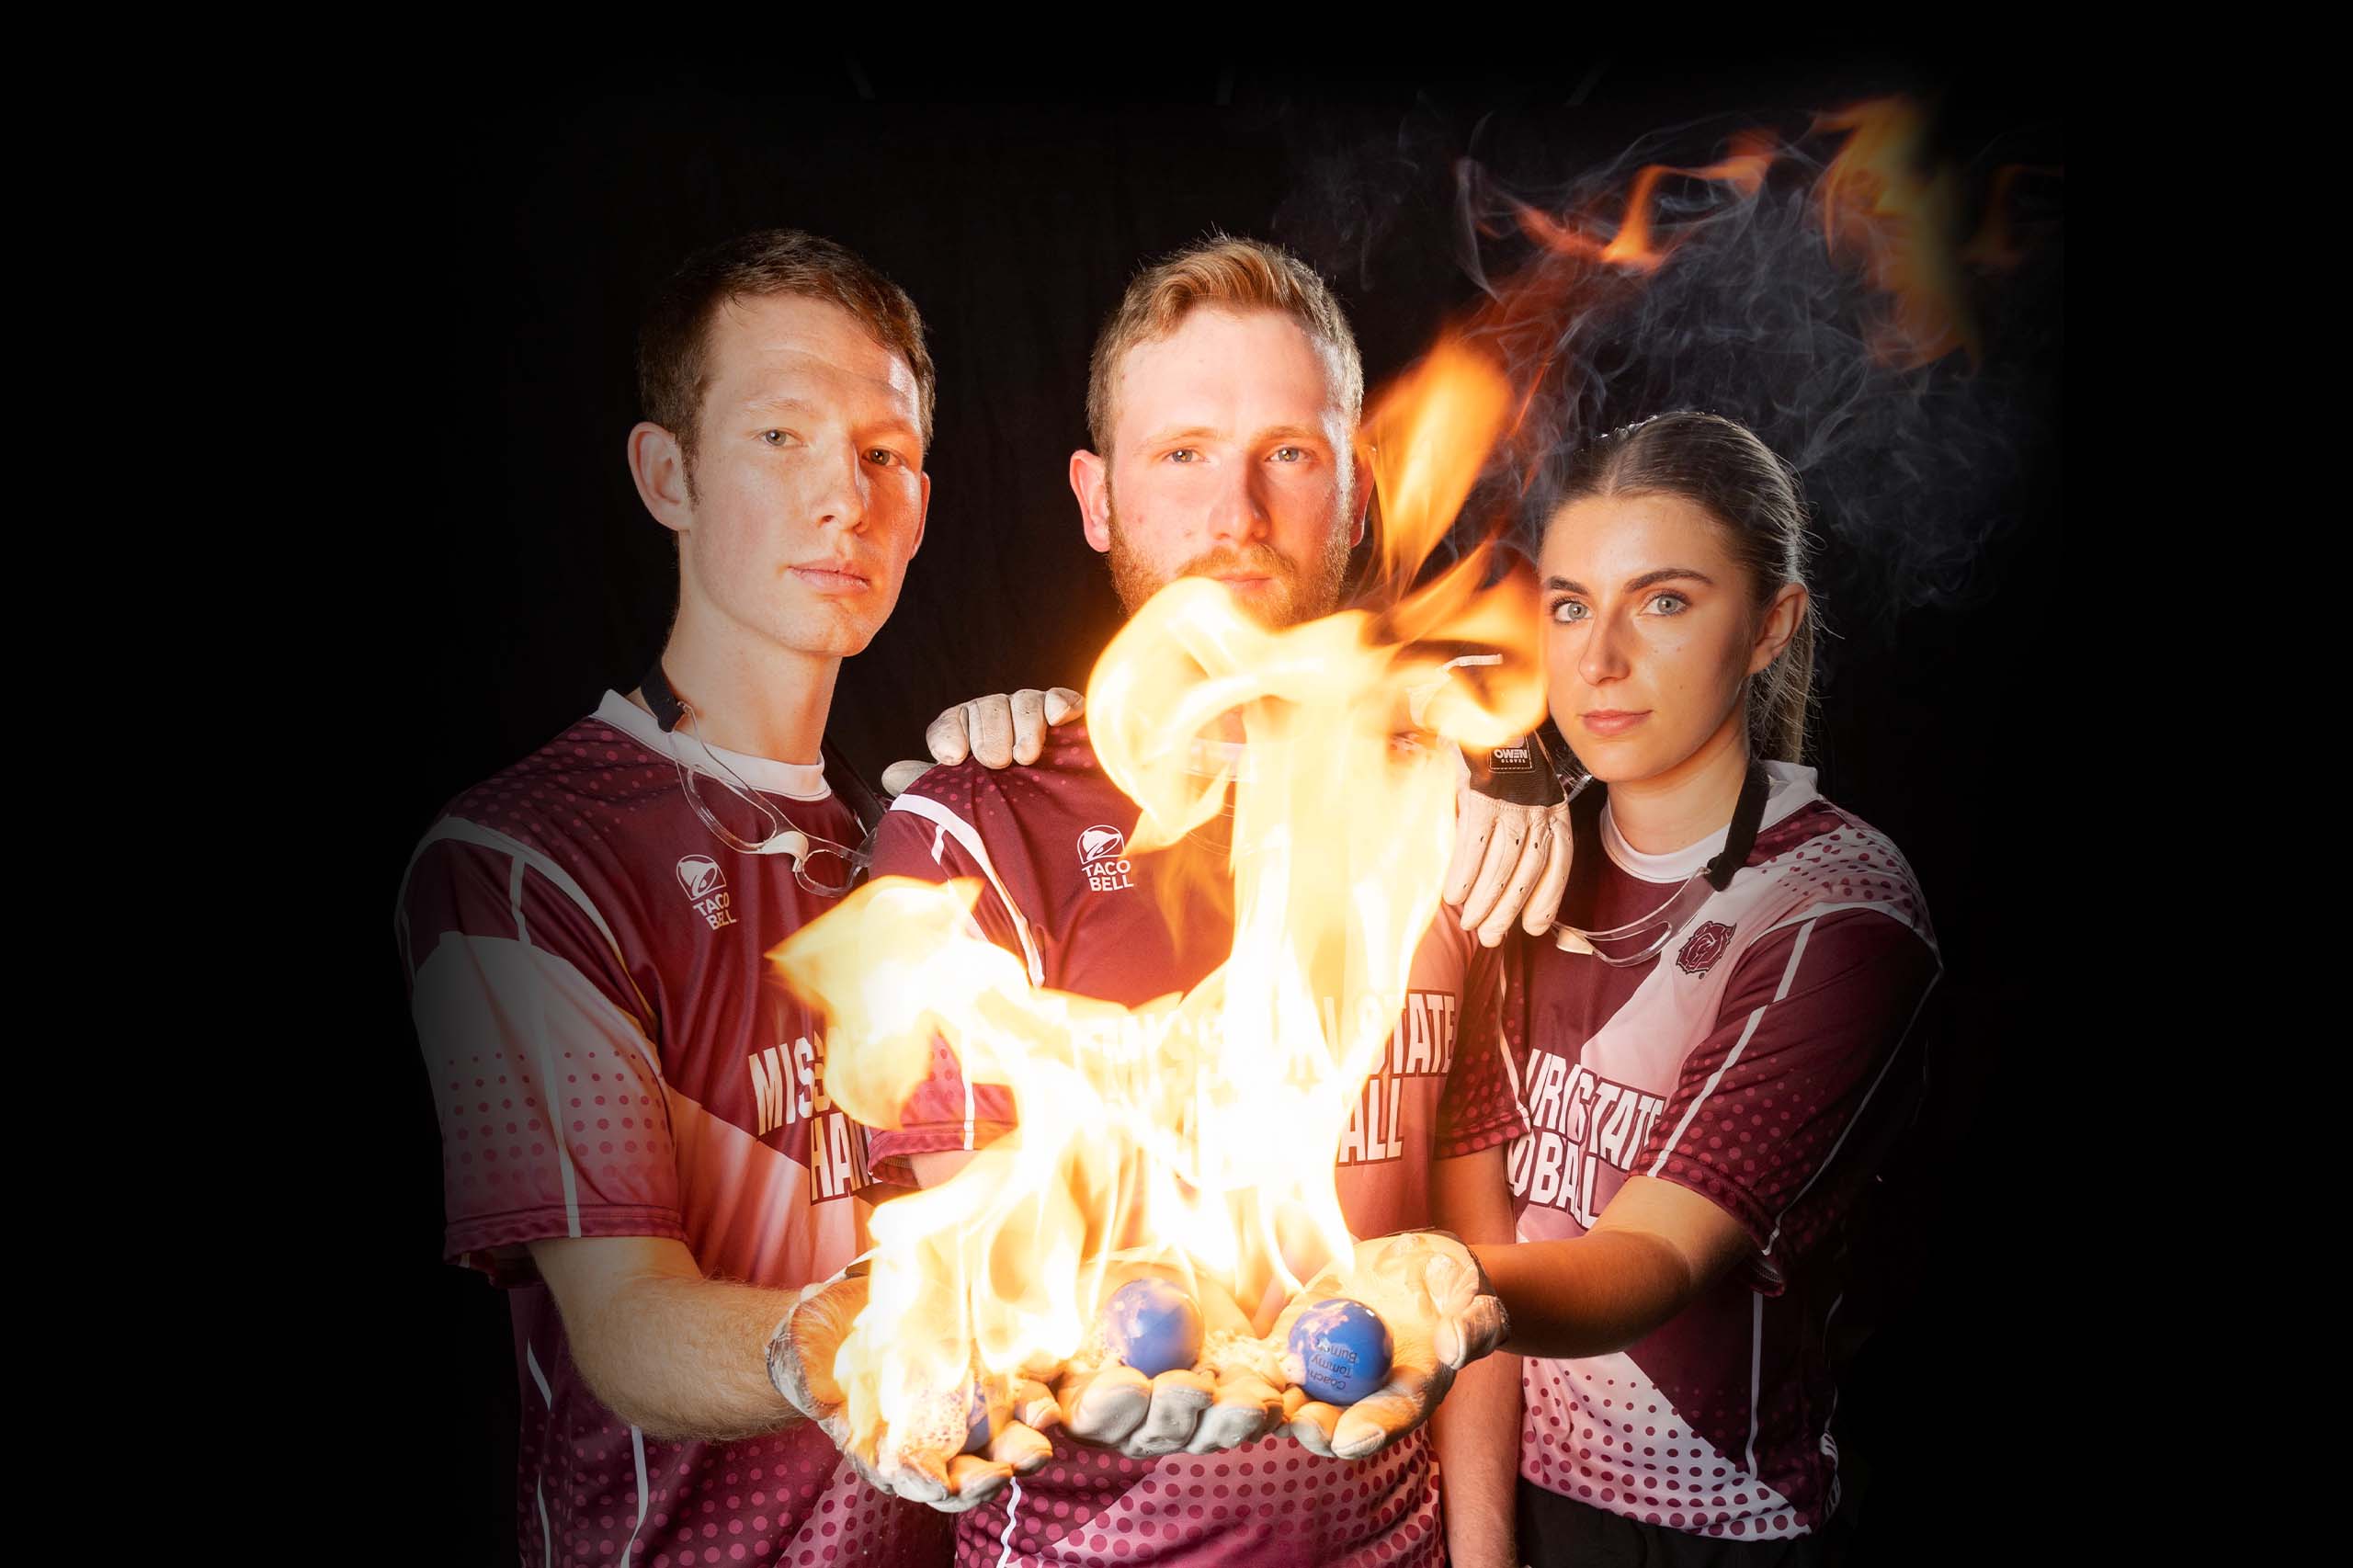 The MSU Handball team holds fiery handballs in their gloved hands.